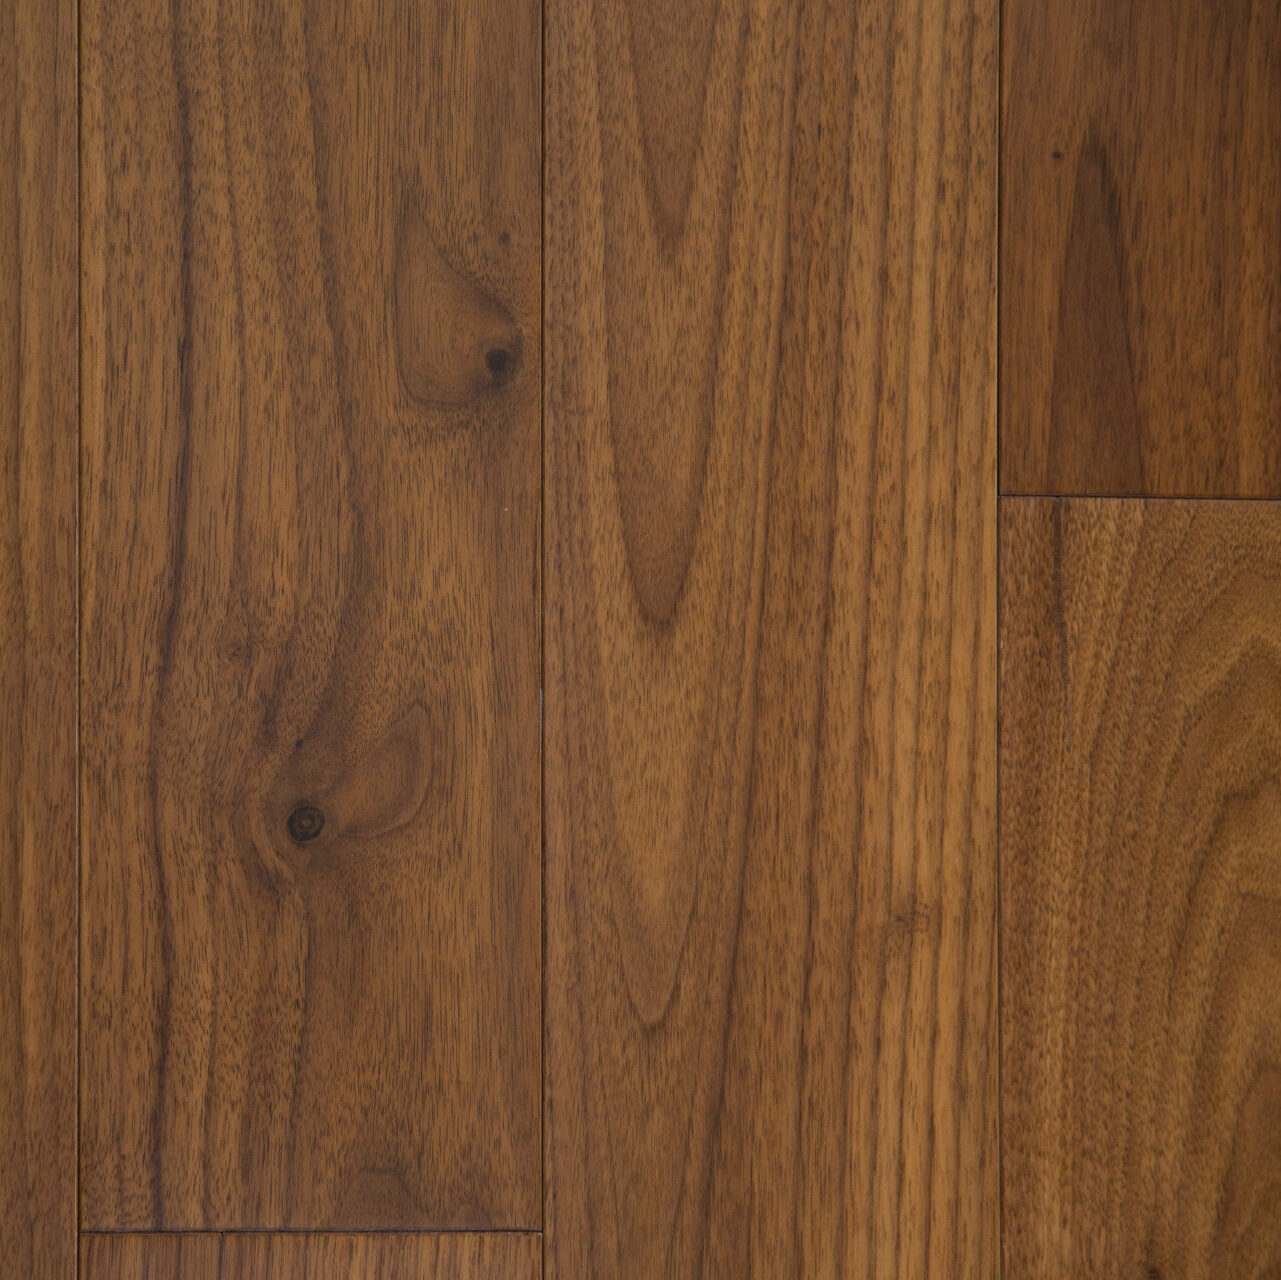 Wood Parquet Flooring - Walnut Glam